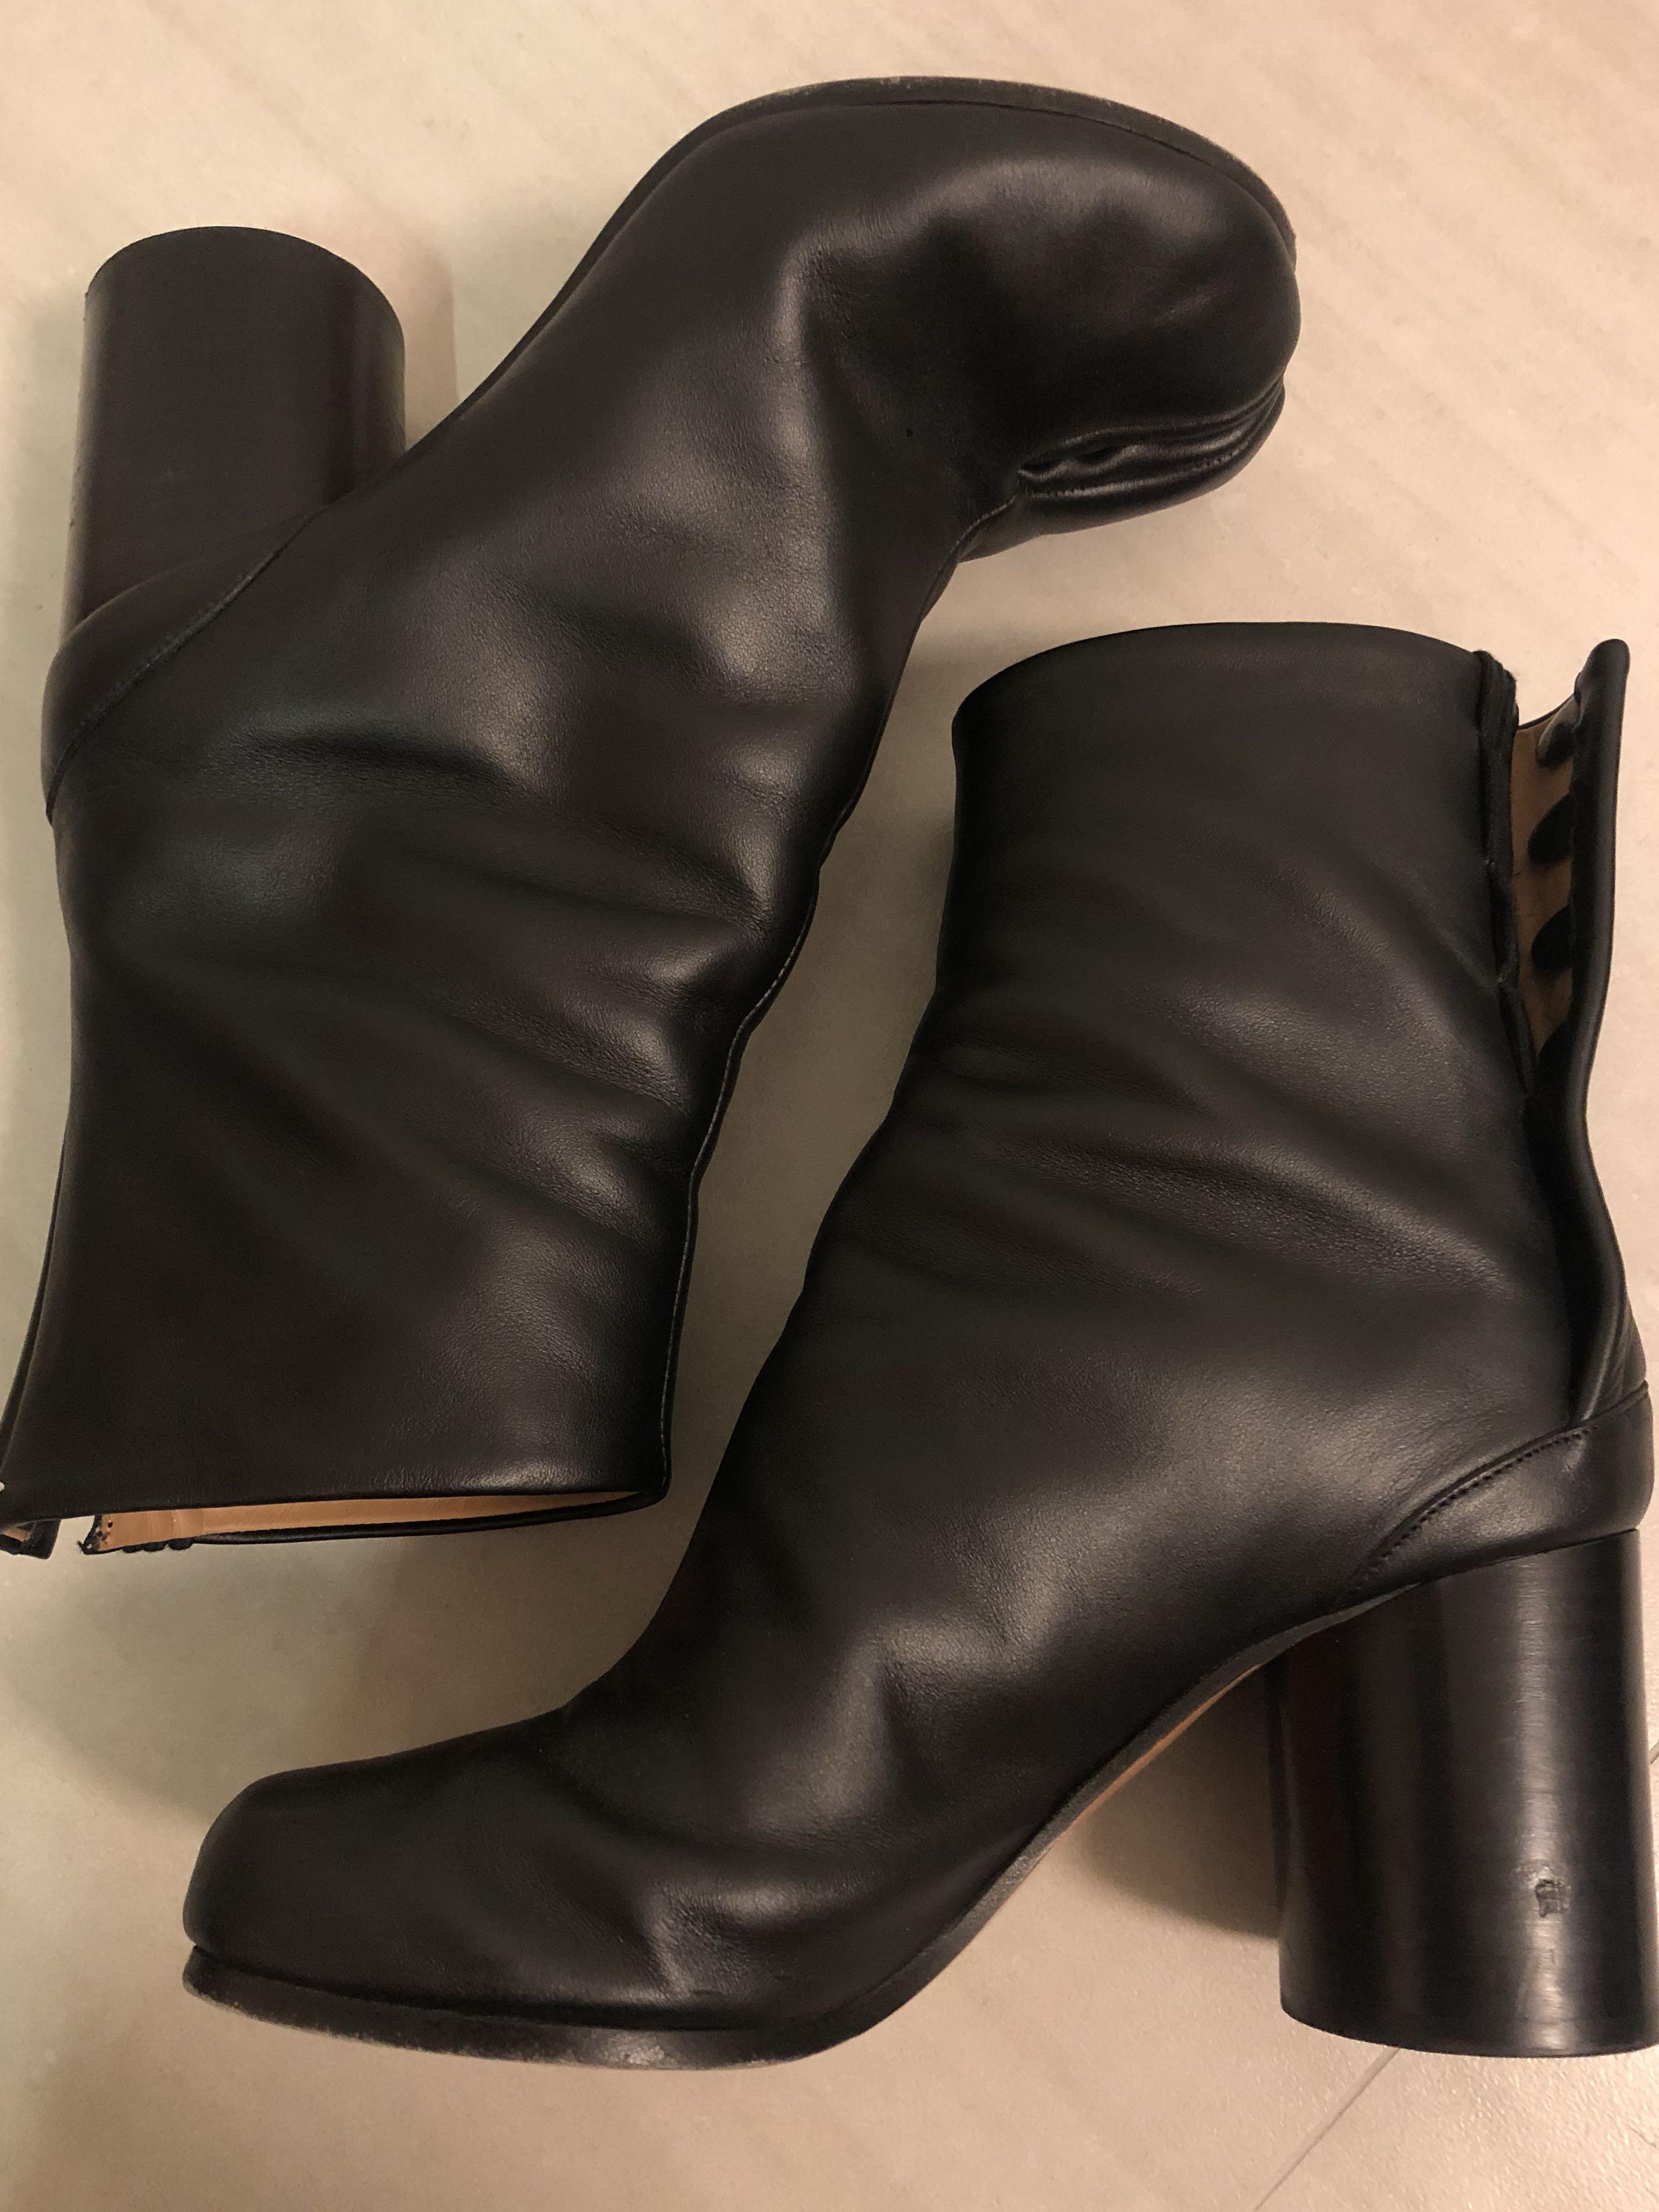 used tabi boots